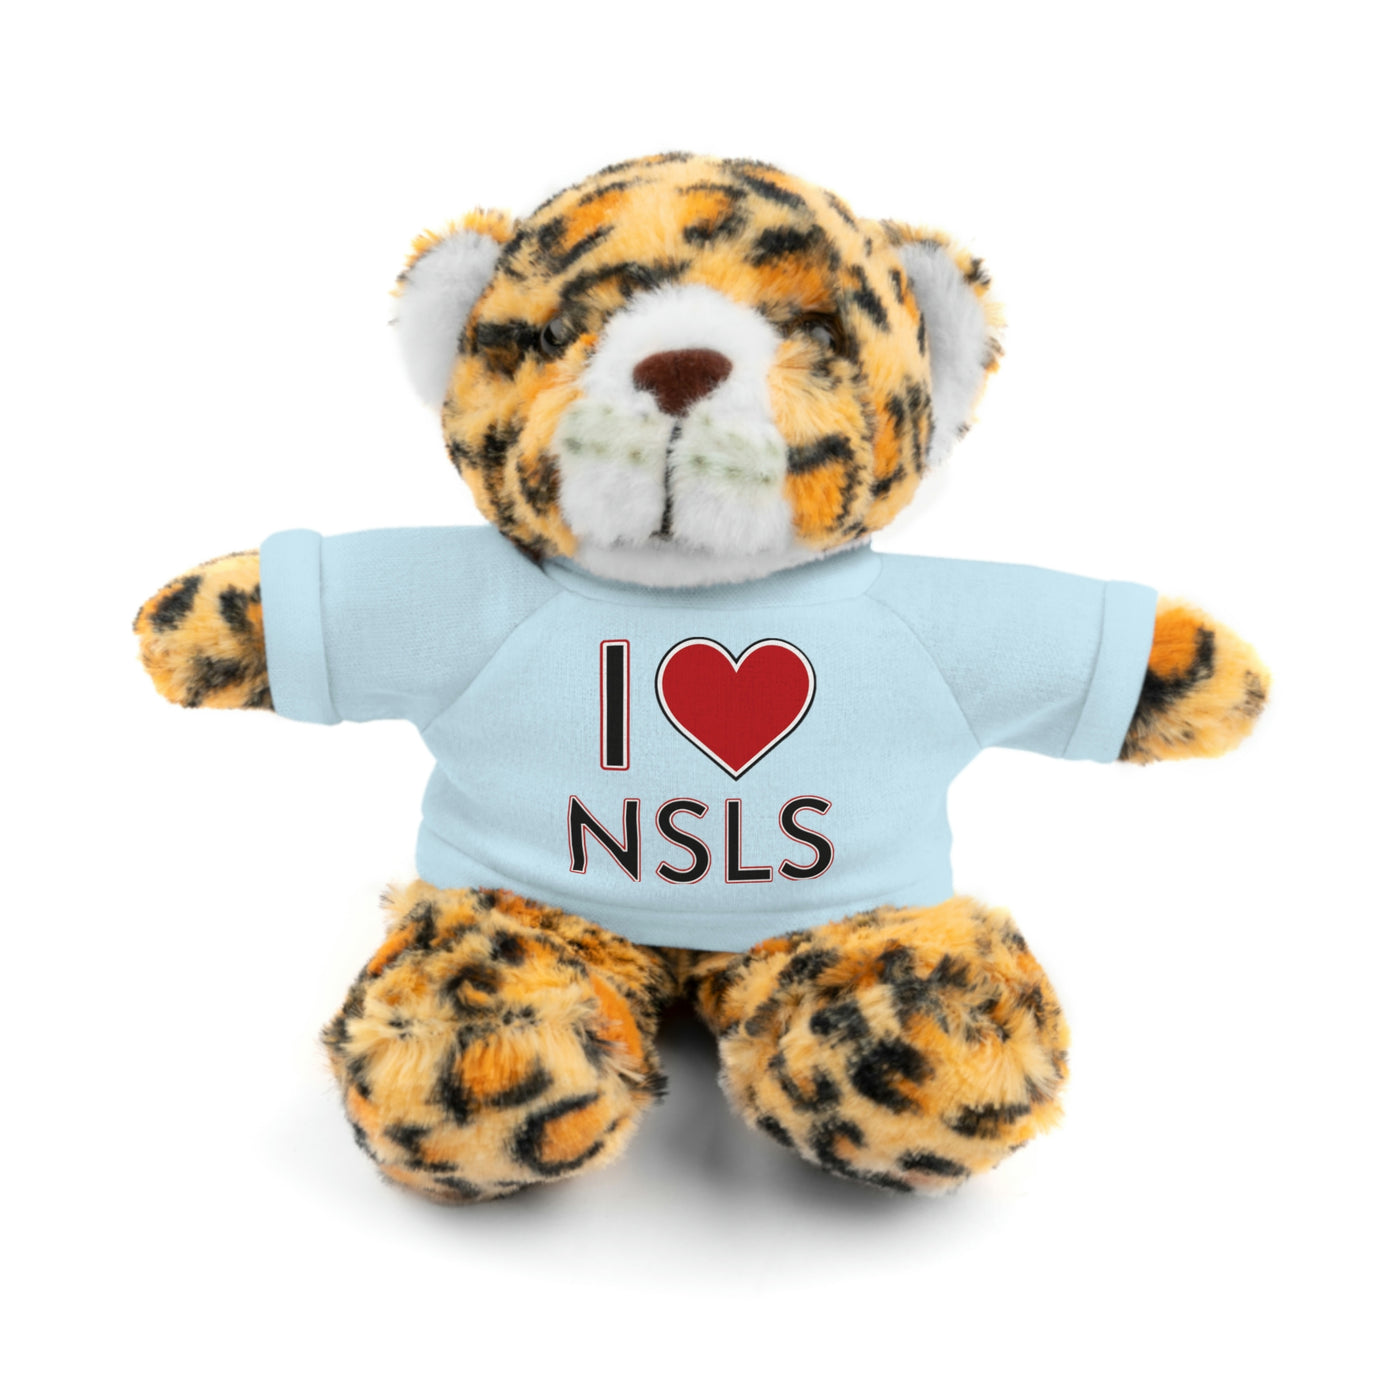 Stuffed Animals with NSLS Tee